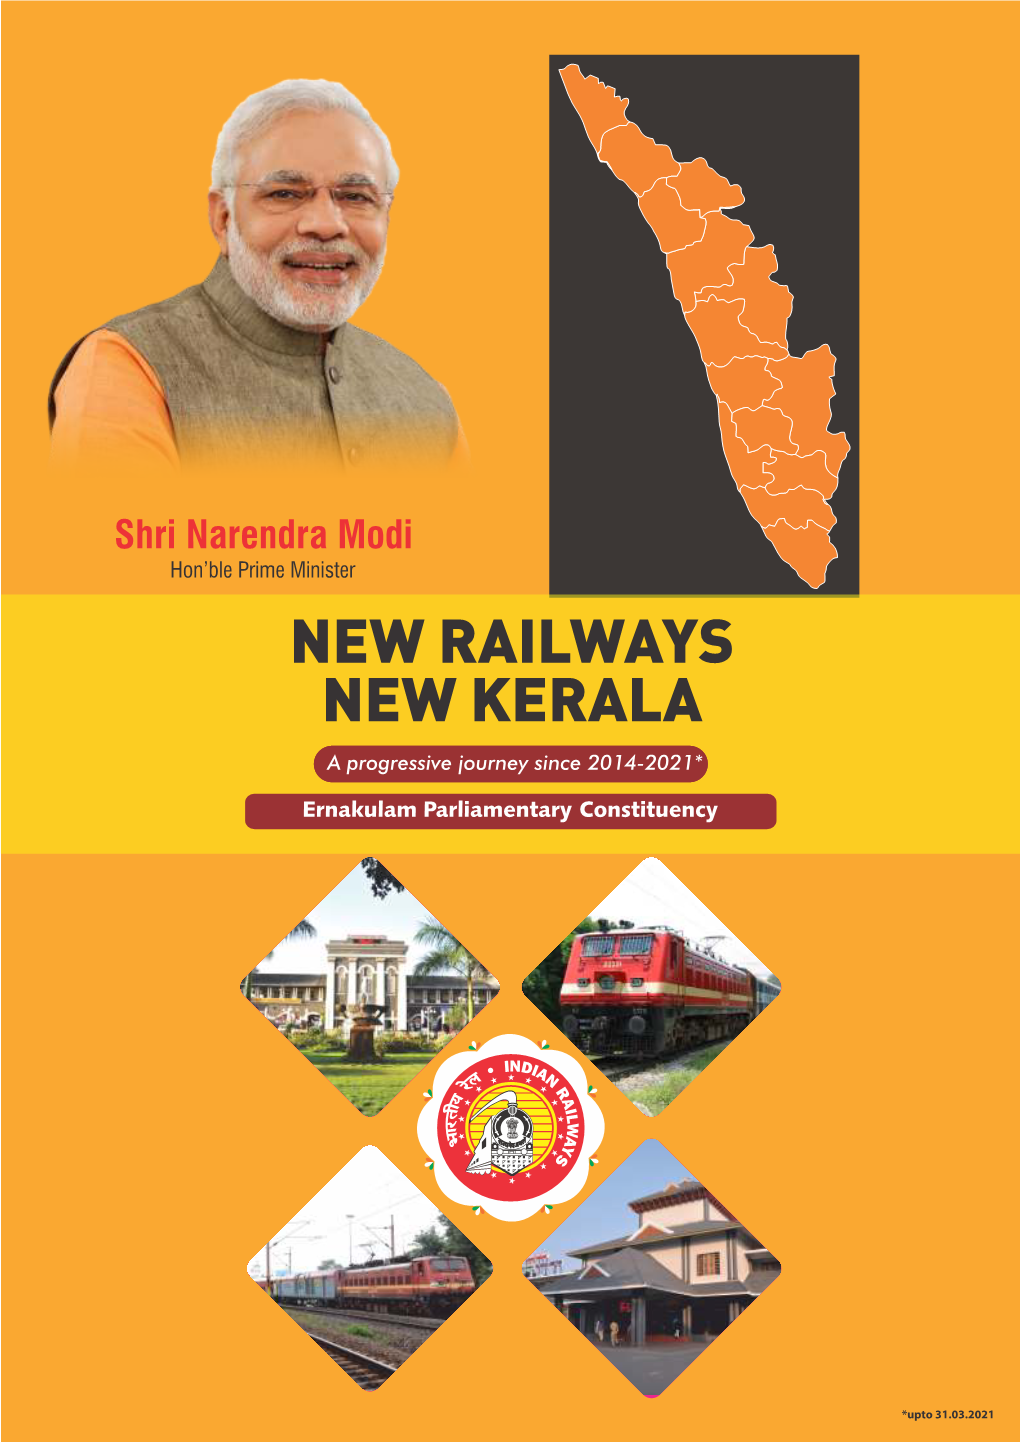 NEW RAILWAYS NEW KERALA a Progressive Journey Since 2014-2021*